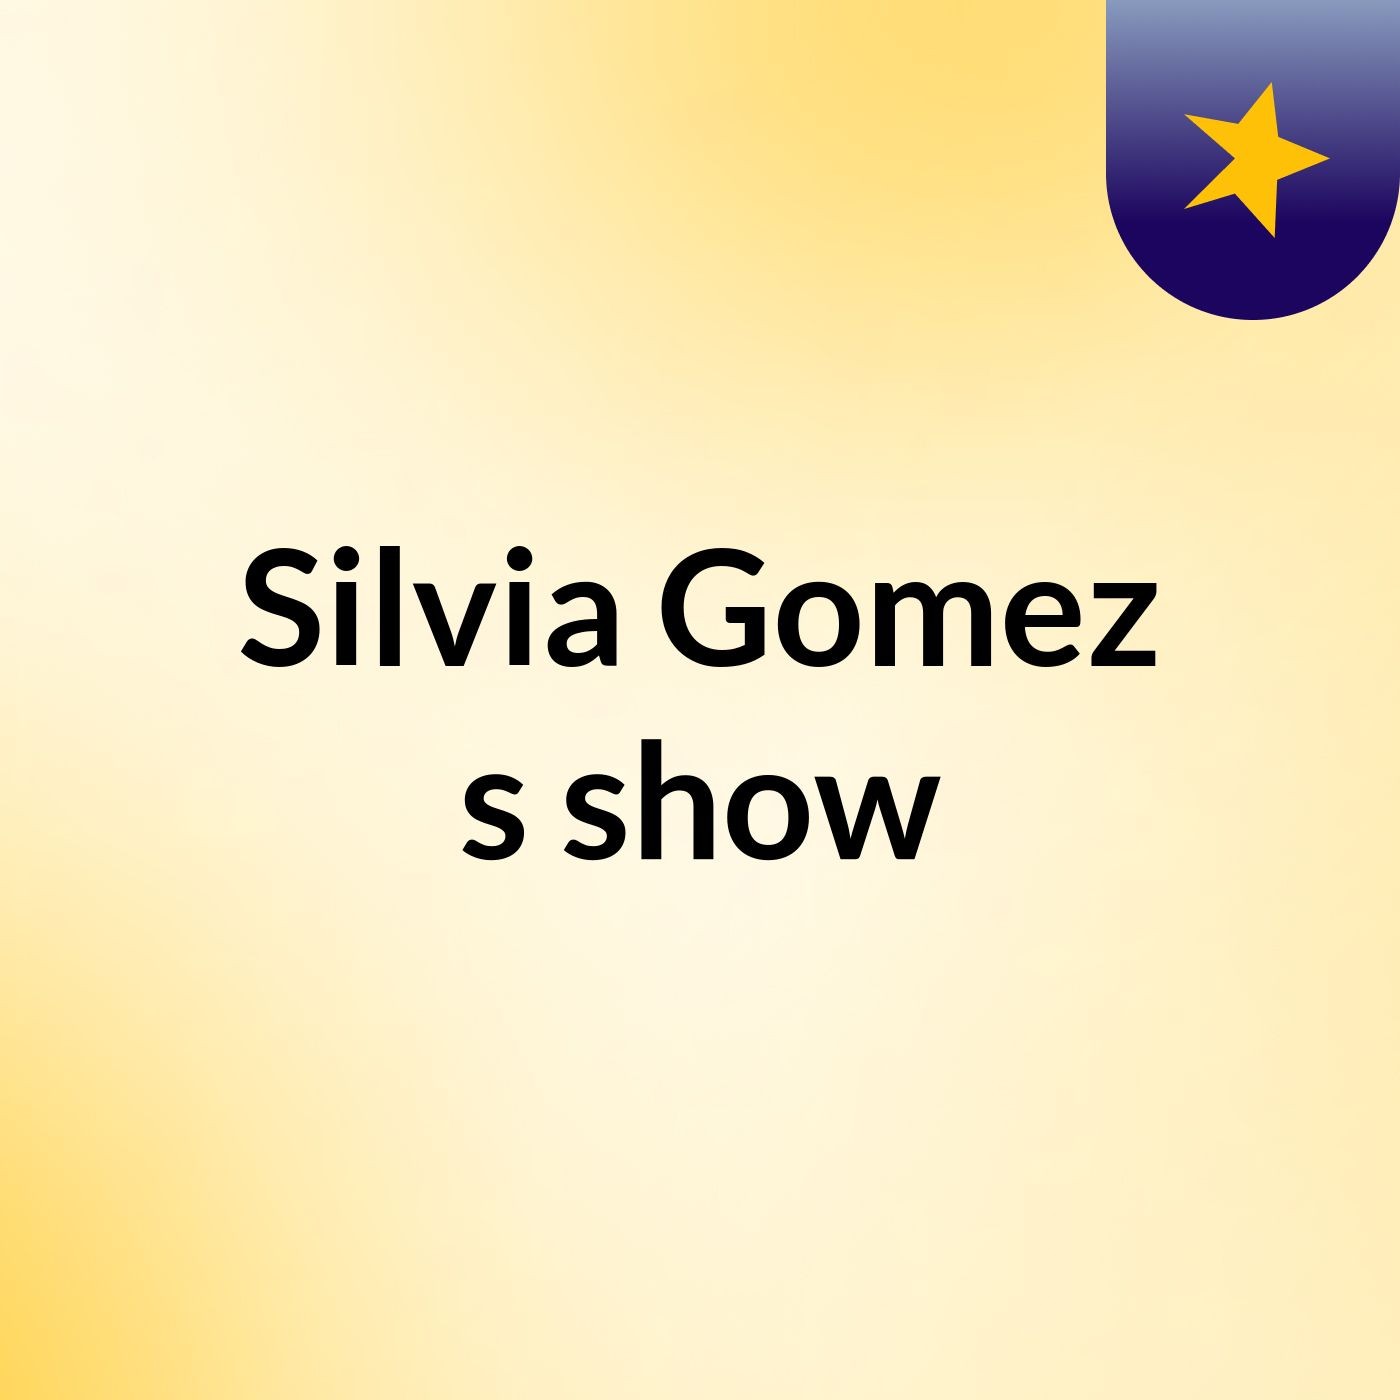 Silvia Gomez's show